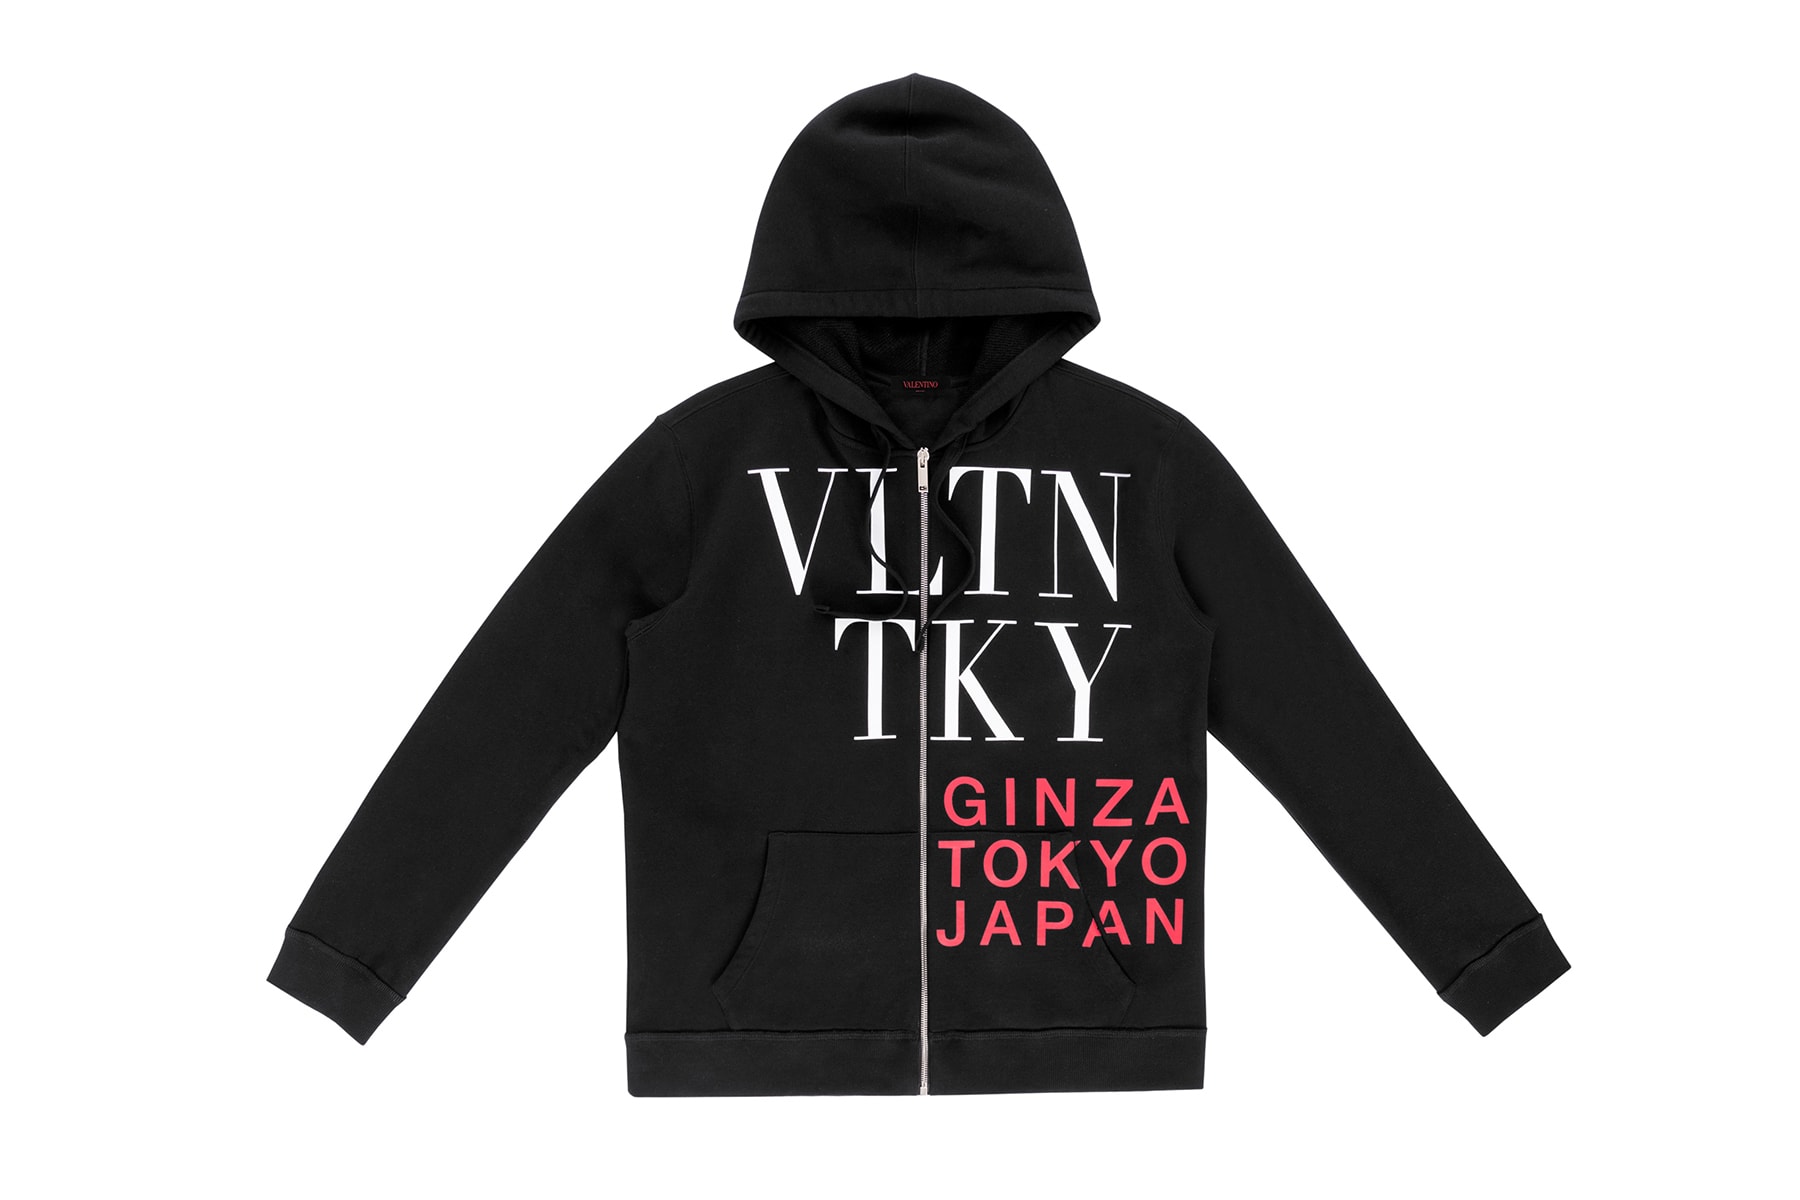 Valentino 2019年プレタポルテコレクションの東京開催を記念した “VLTN” 限定カプセルコレクション  『GINZA SIX』内のフラッグシップストアにて店頭販売される主役級アイテムと粋なガジェット群をチェック 